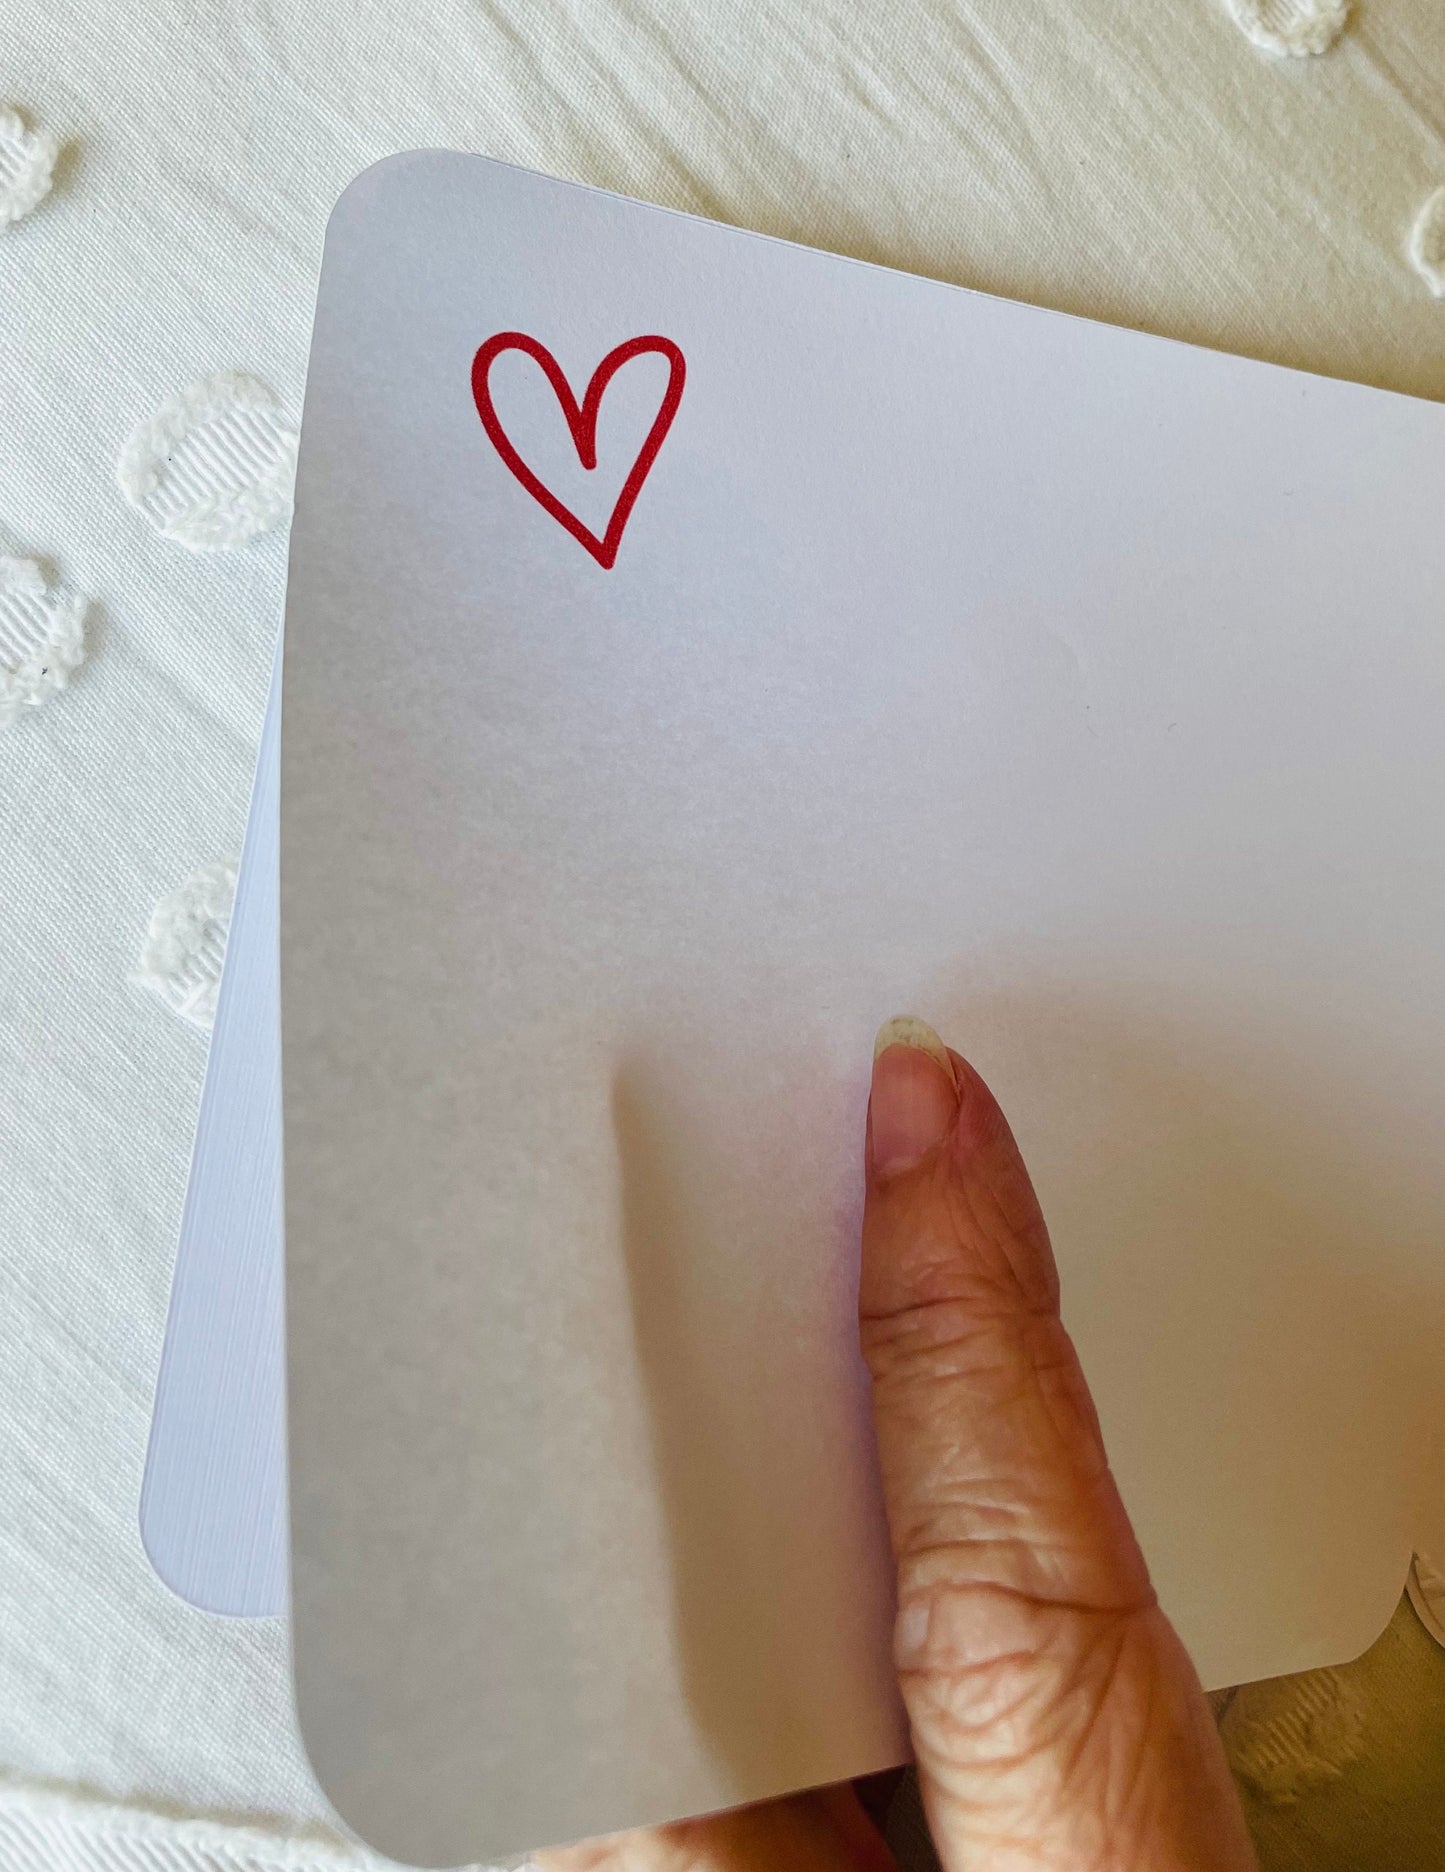 Alexa Send My Girlfriend a Valentine’s Day Card